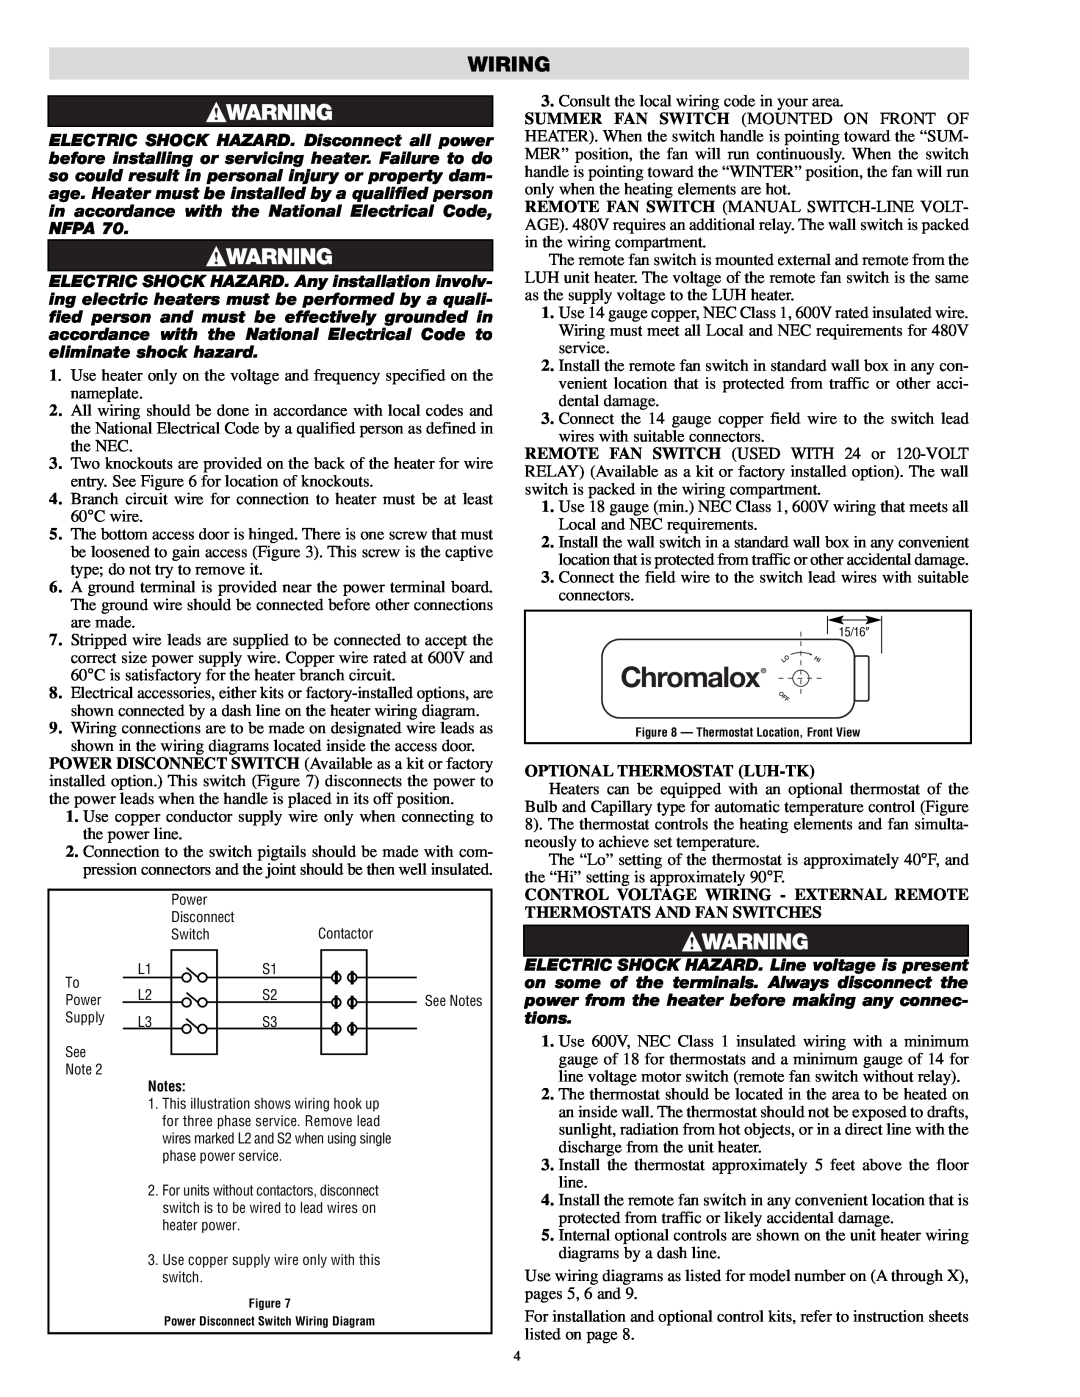 Chromalox PF479-6 dimensions Wiring, Optional Thermostat Luh-Tk, Chromalox 